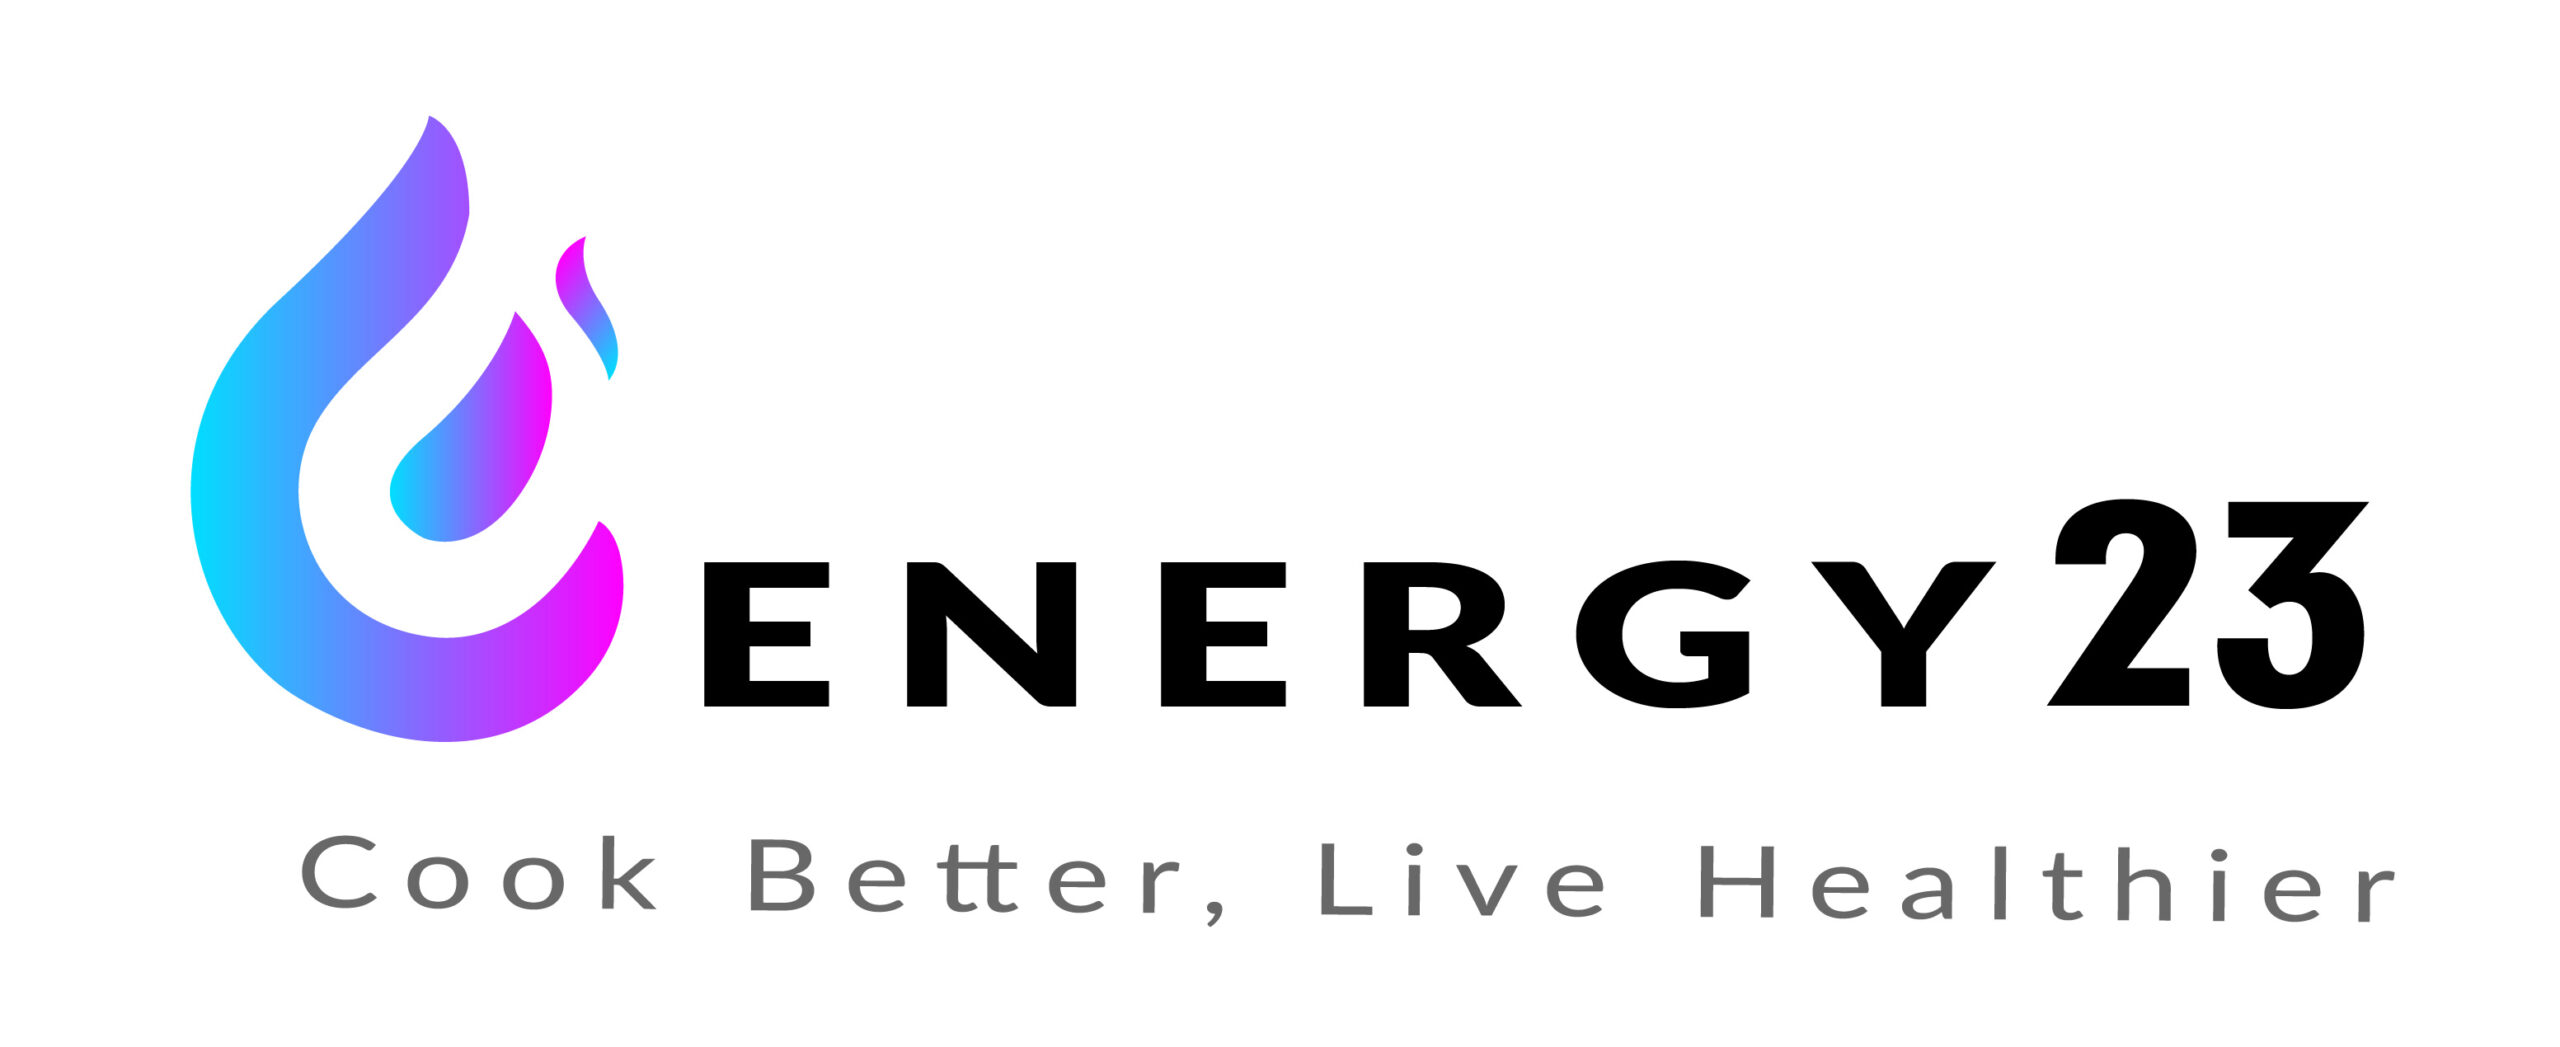 Energu 23 logo